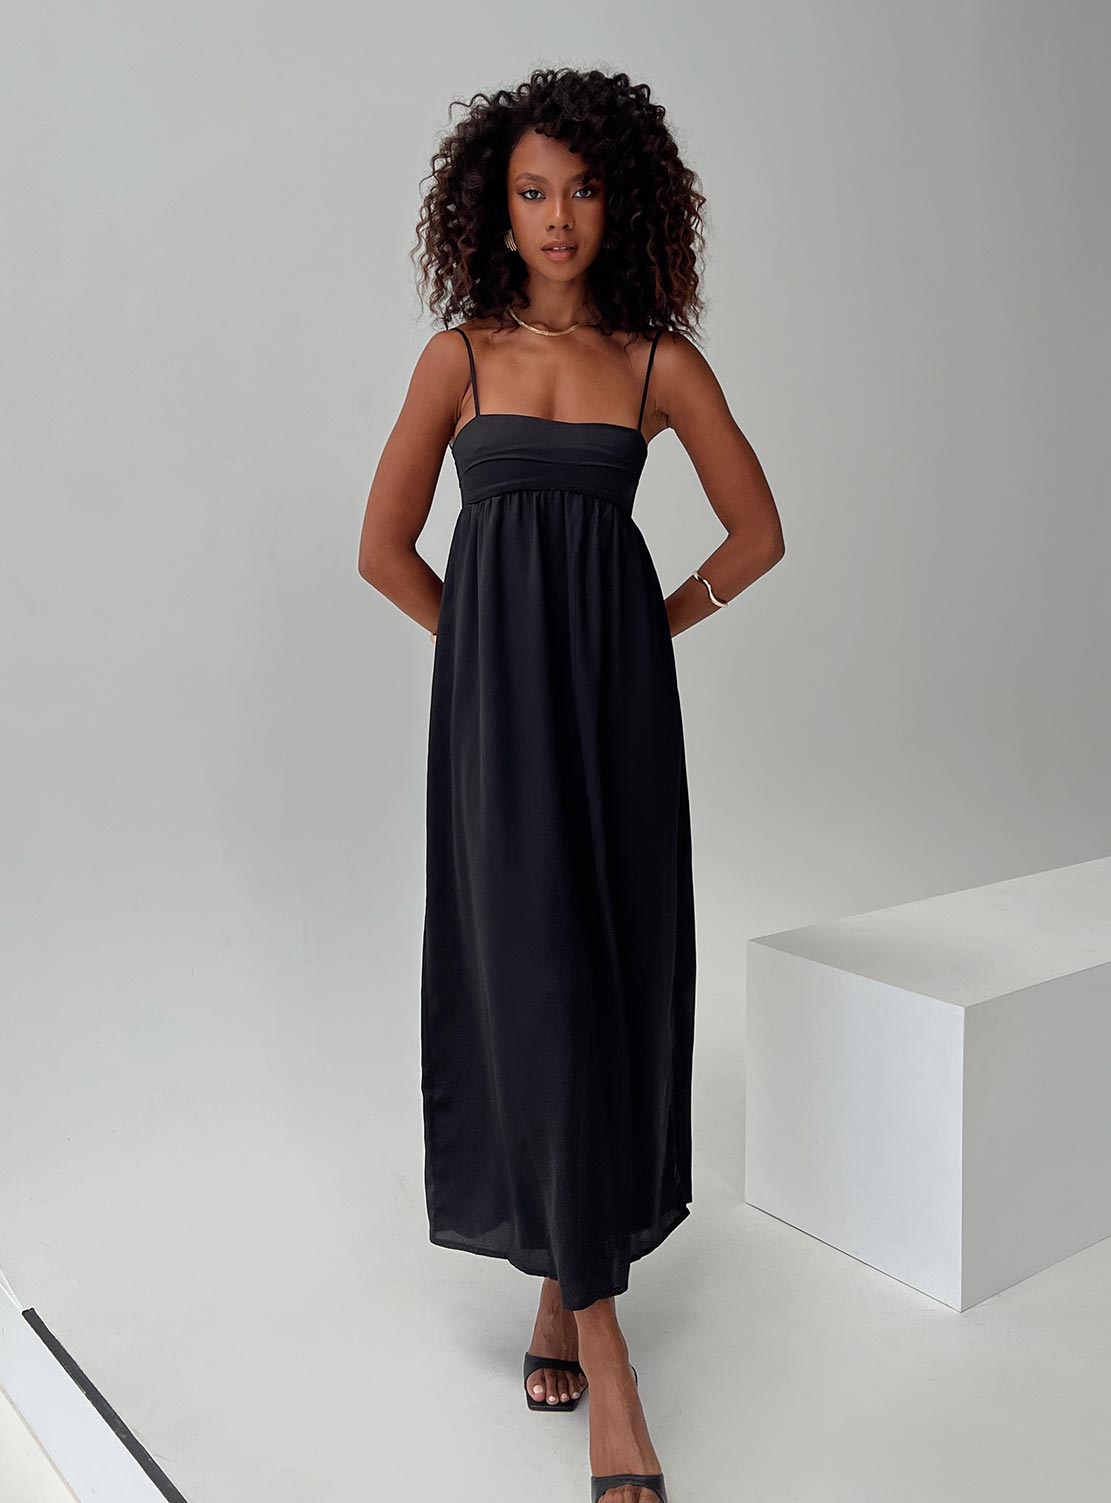 Shop Formal Dress - Ortega Maxi Dress Black fourth image